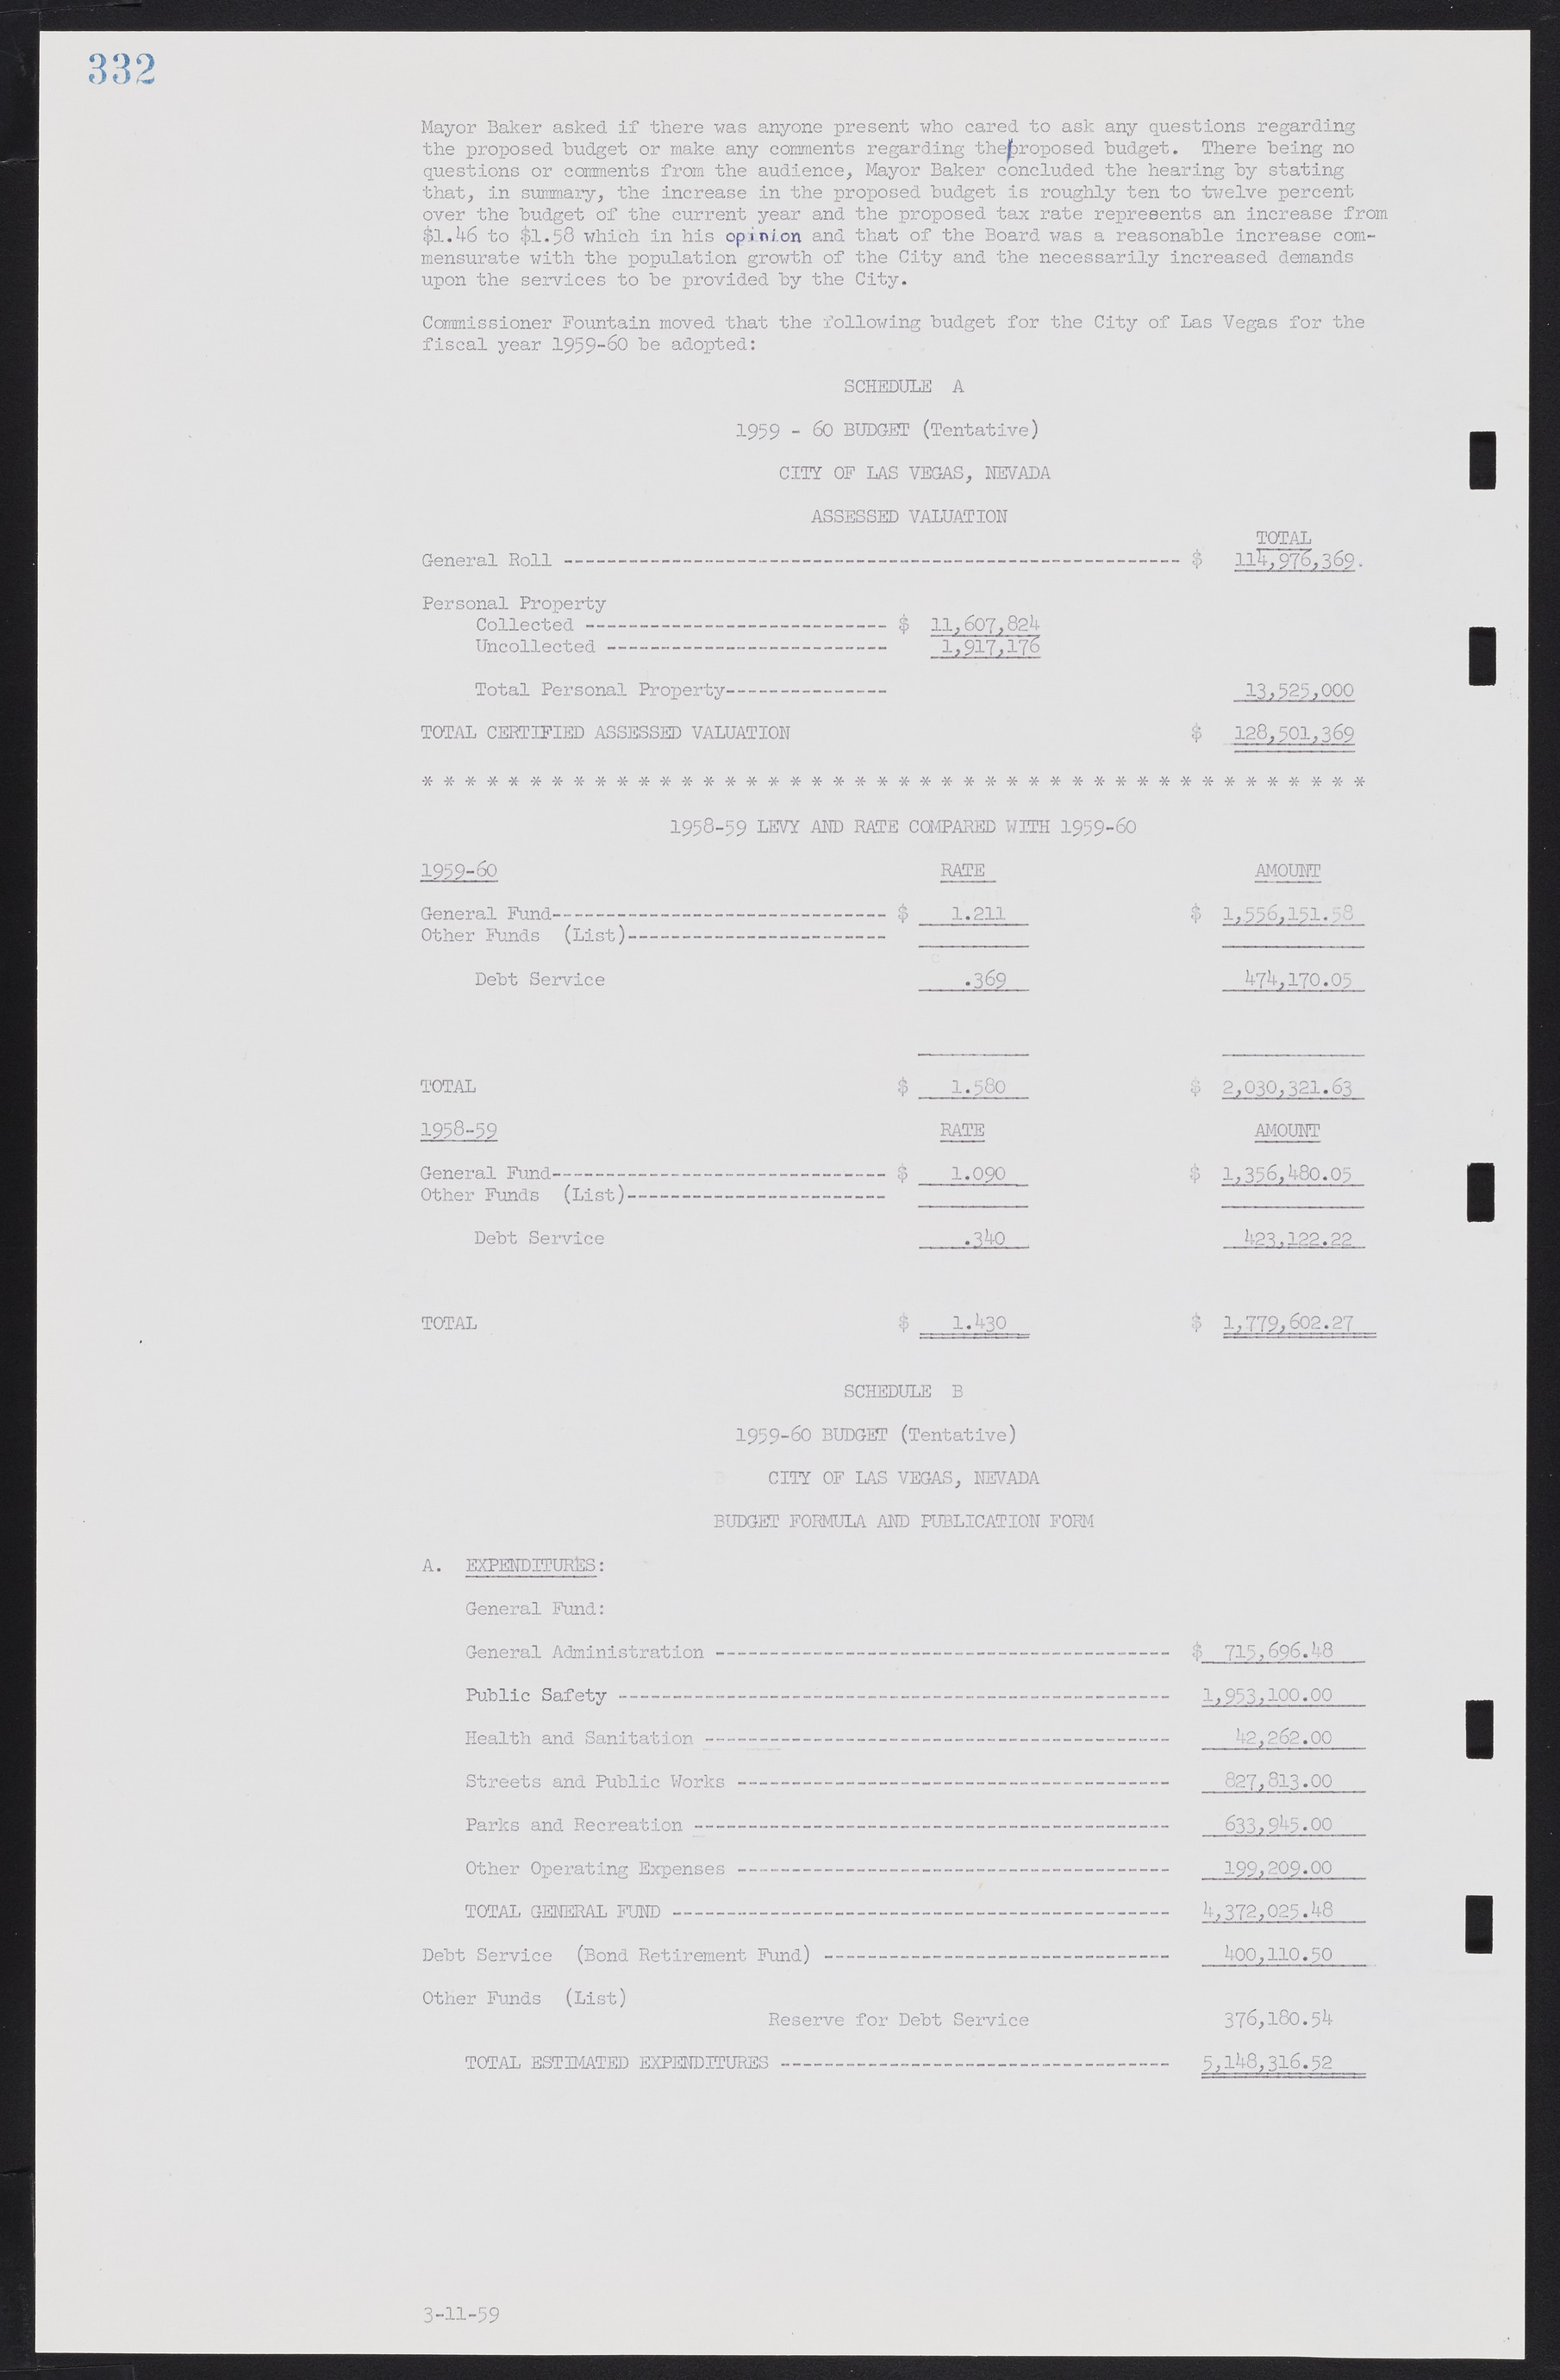 Las Vegas City Commission Minutes, November 20, 1957 to December 2, 1959, lvc000011-340